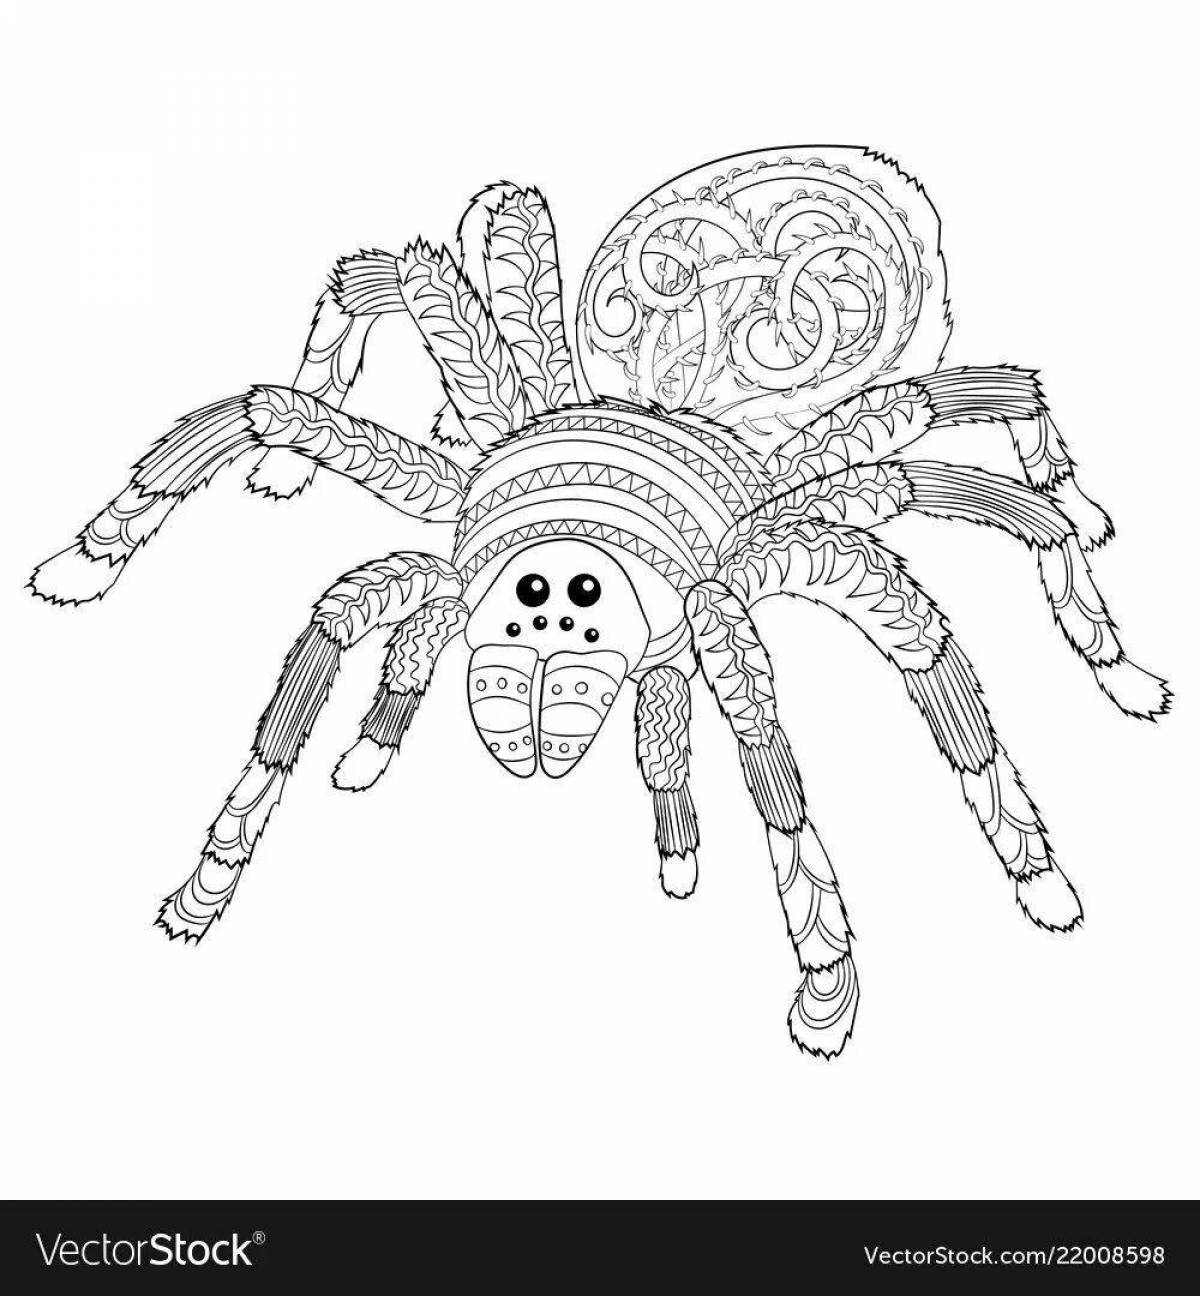 Coloring page dramatic spider tarantula